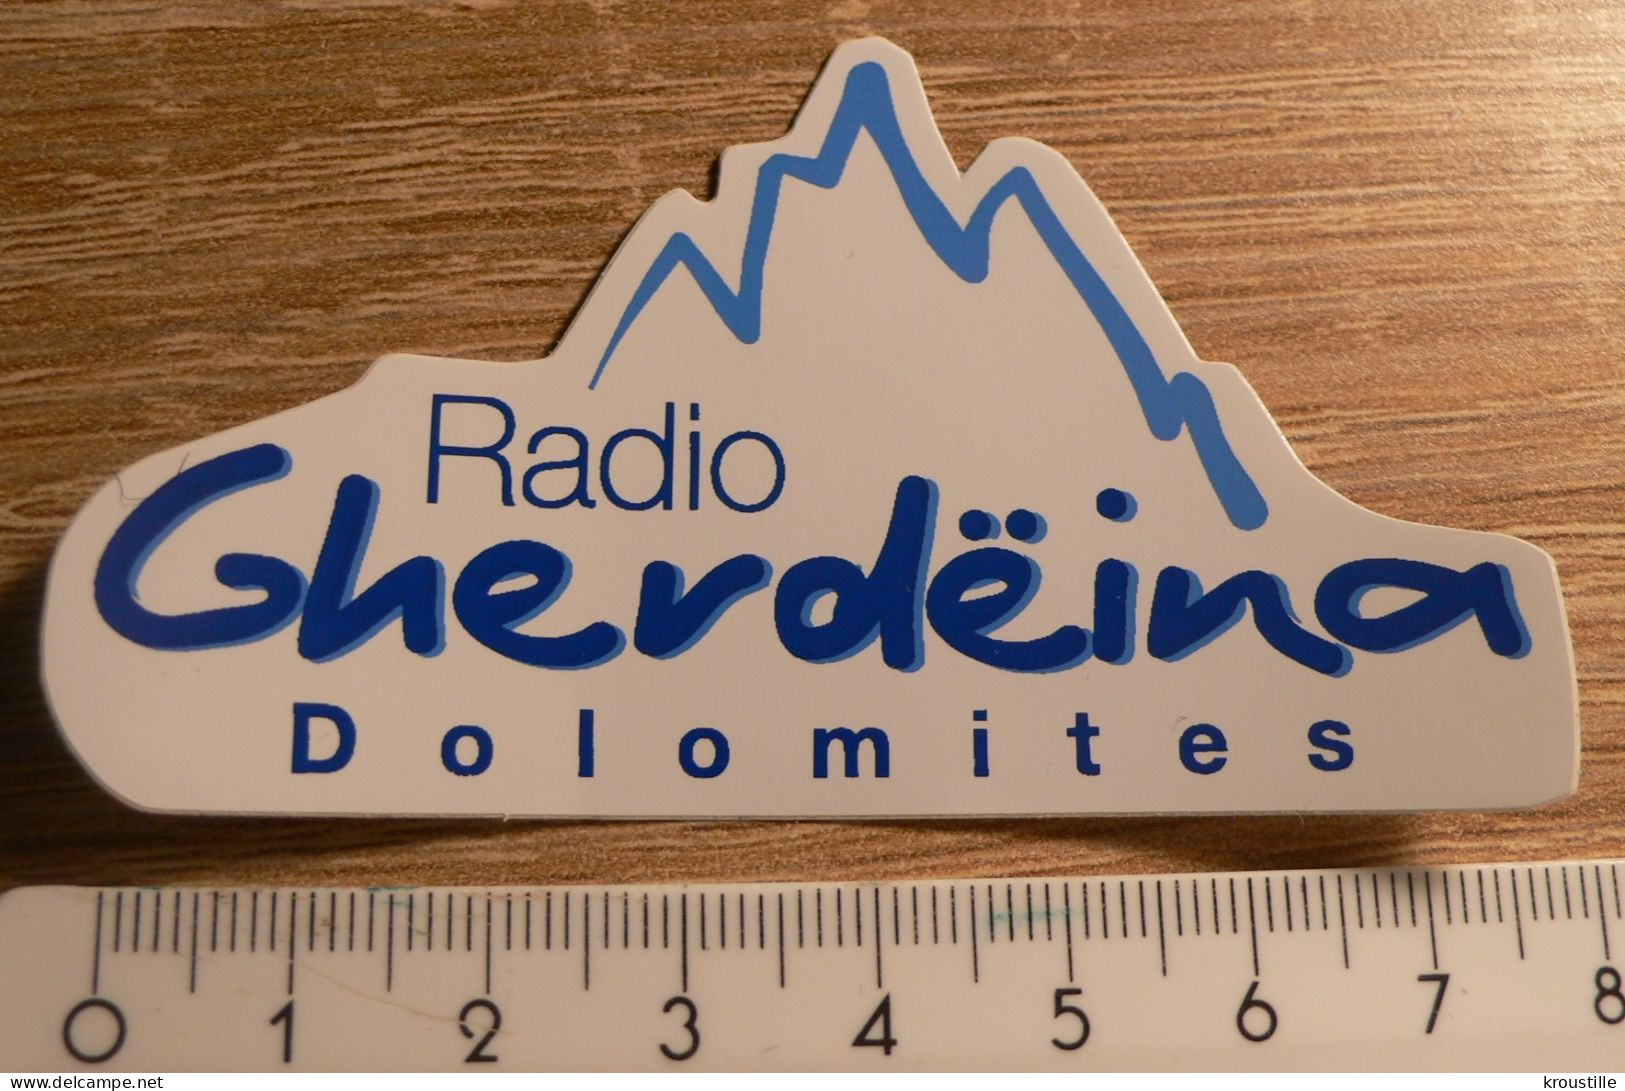 AUTOCOLLANT RADIO GHERDEINA DOLOMITES - ITALIE - Autocollants